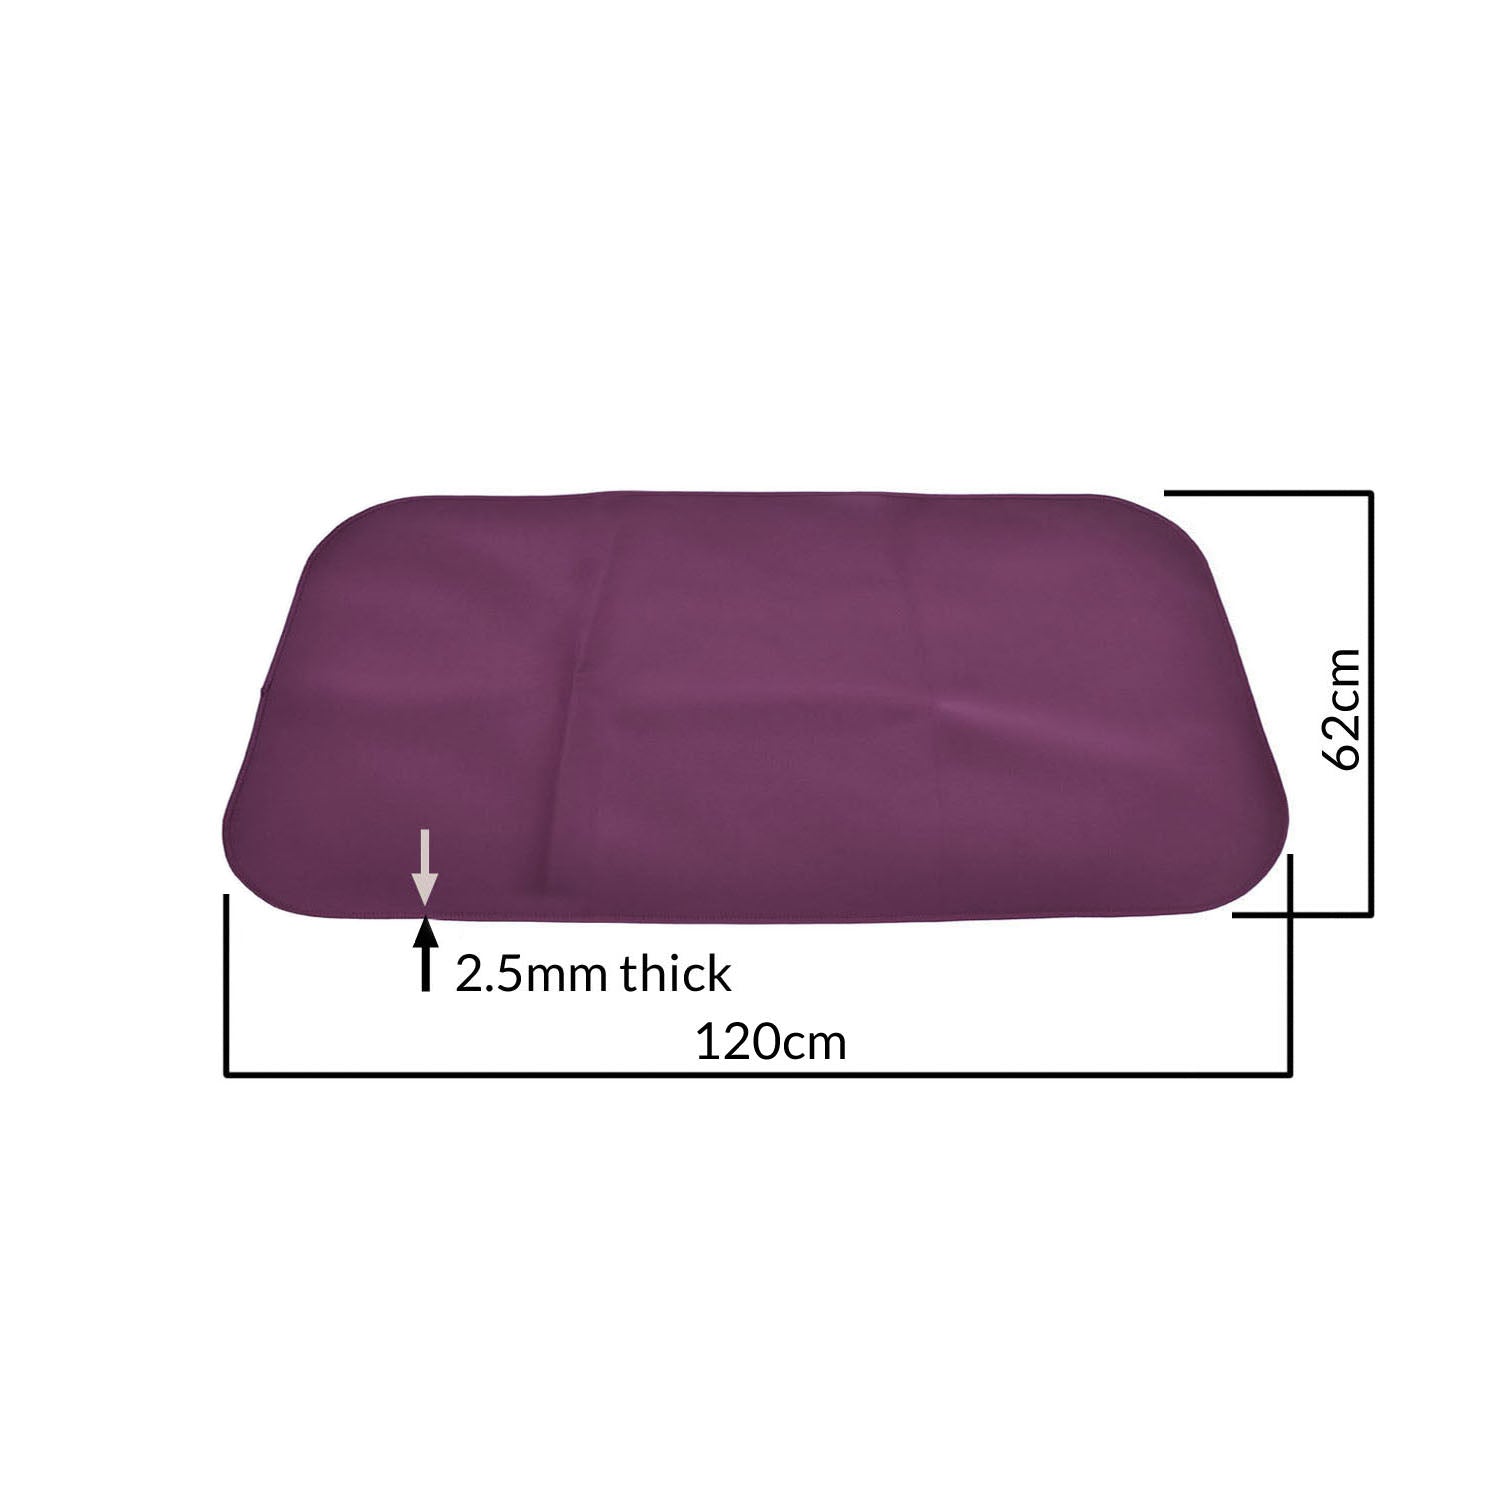 Junior Changing Mat and Waterproof Bag Set - Aubergine/Black (UK VAT Exempt)